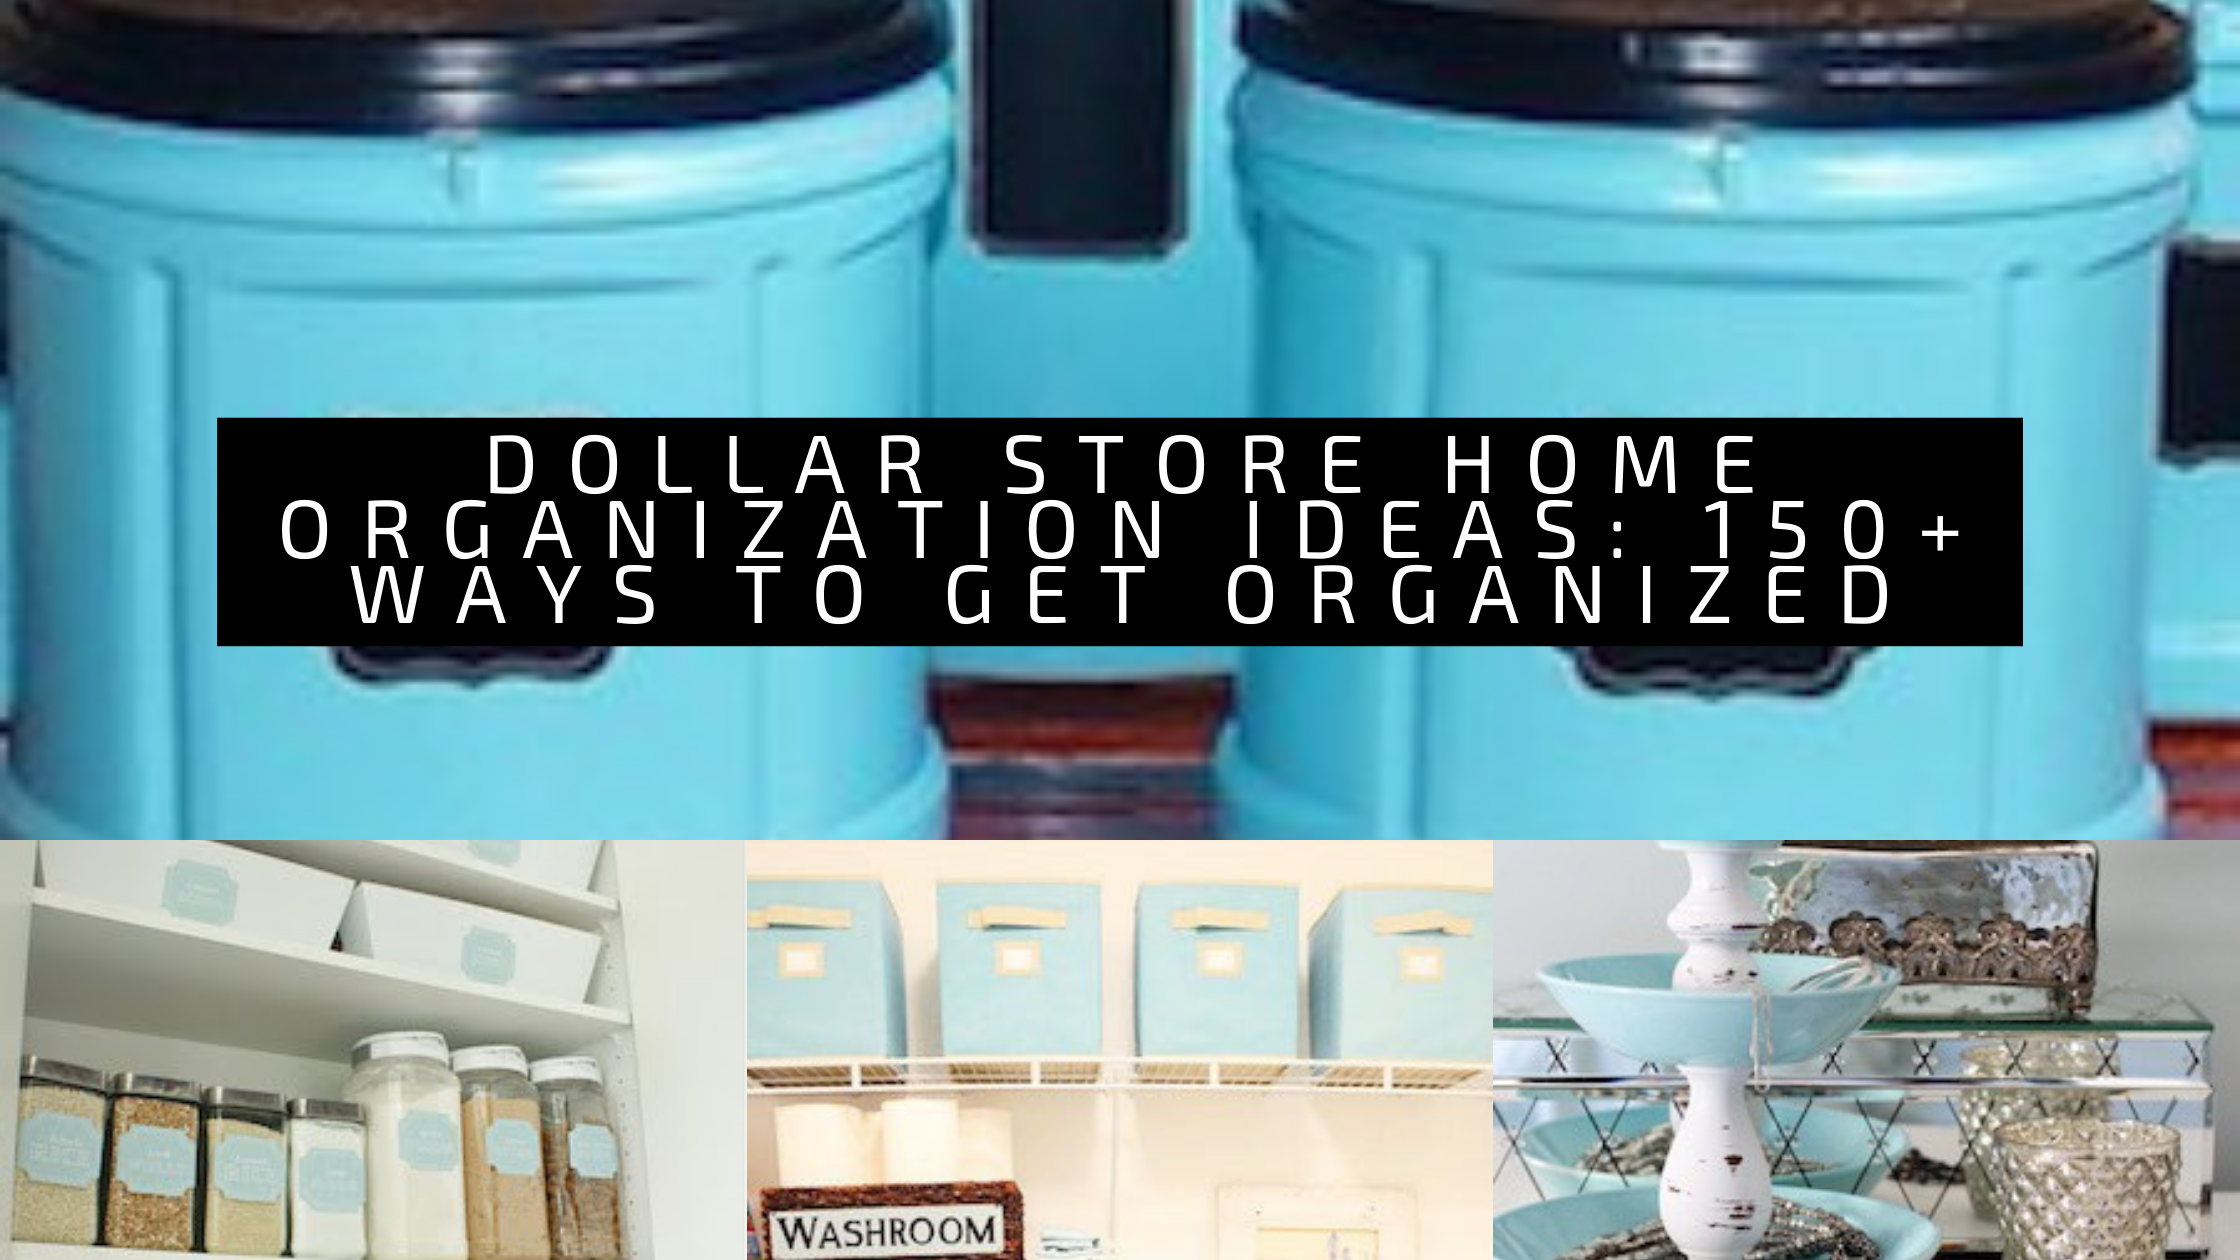 Dollar Store Home Organization Ideas: 150+ Ways to Get Organized 13